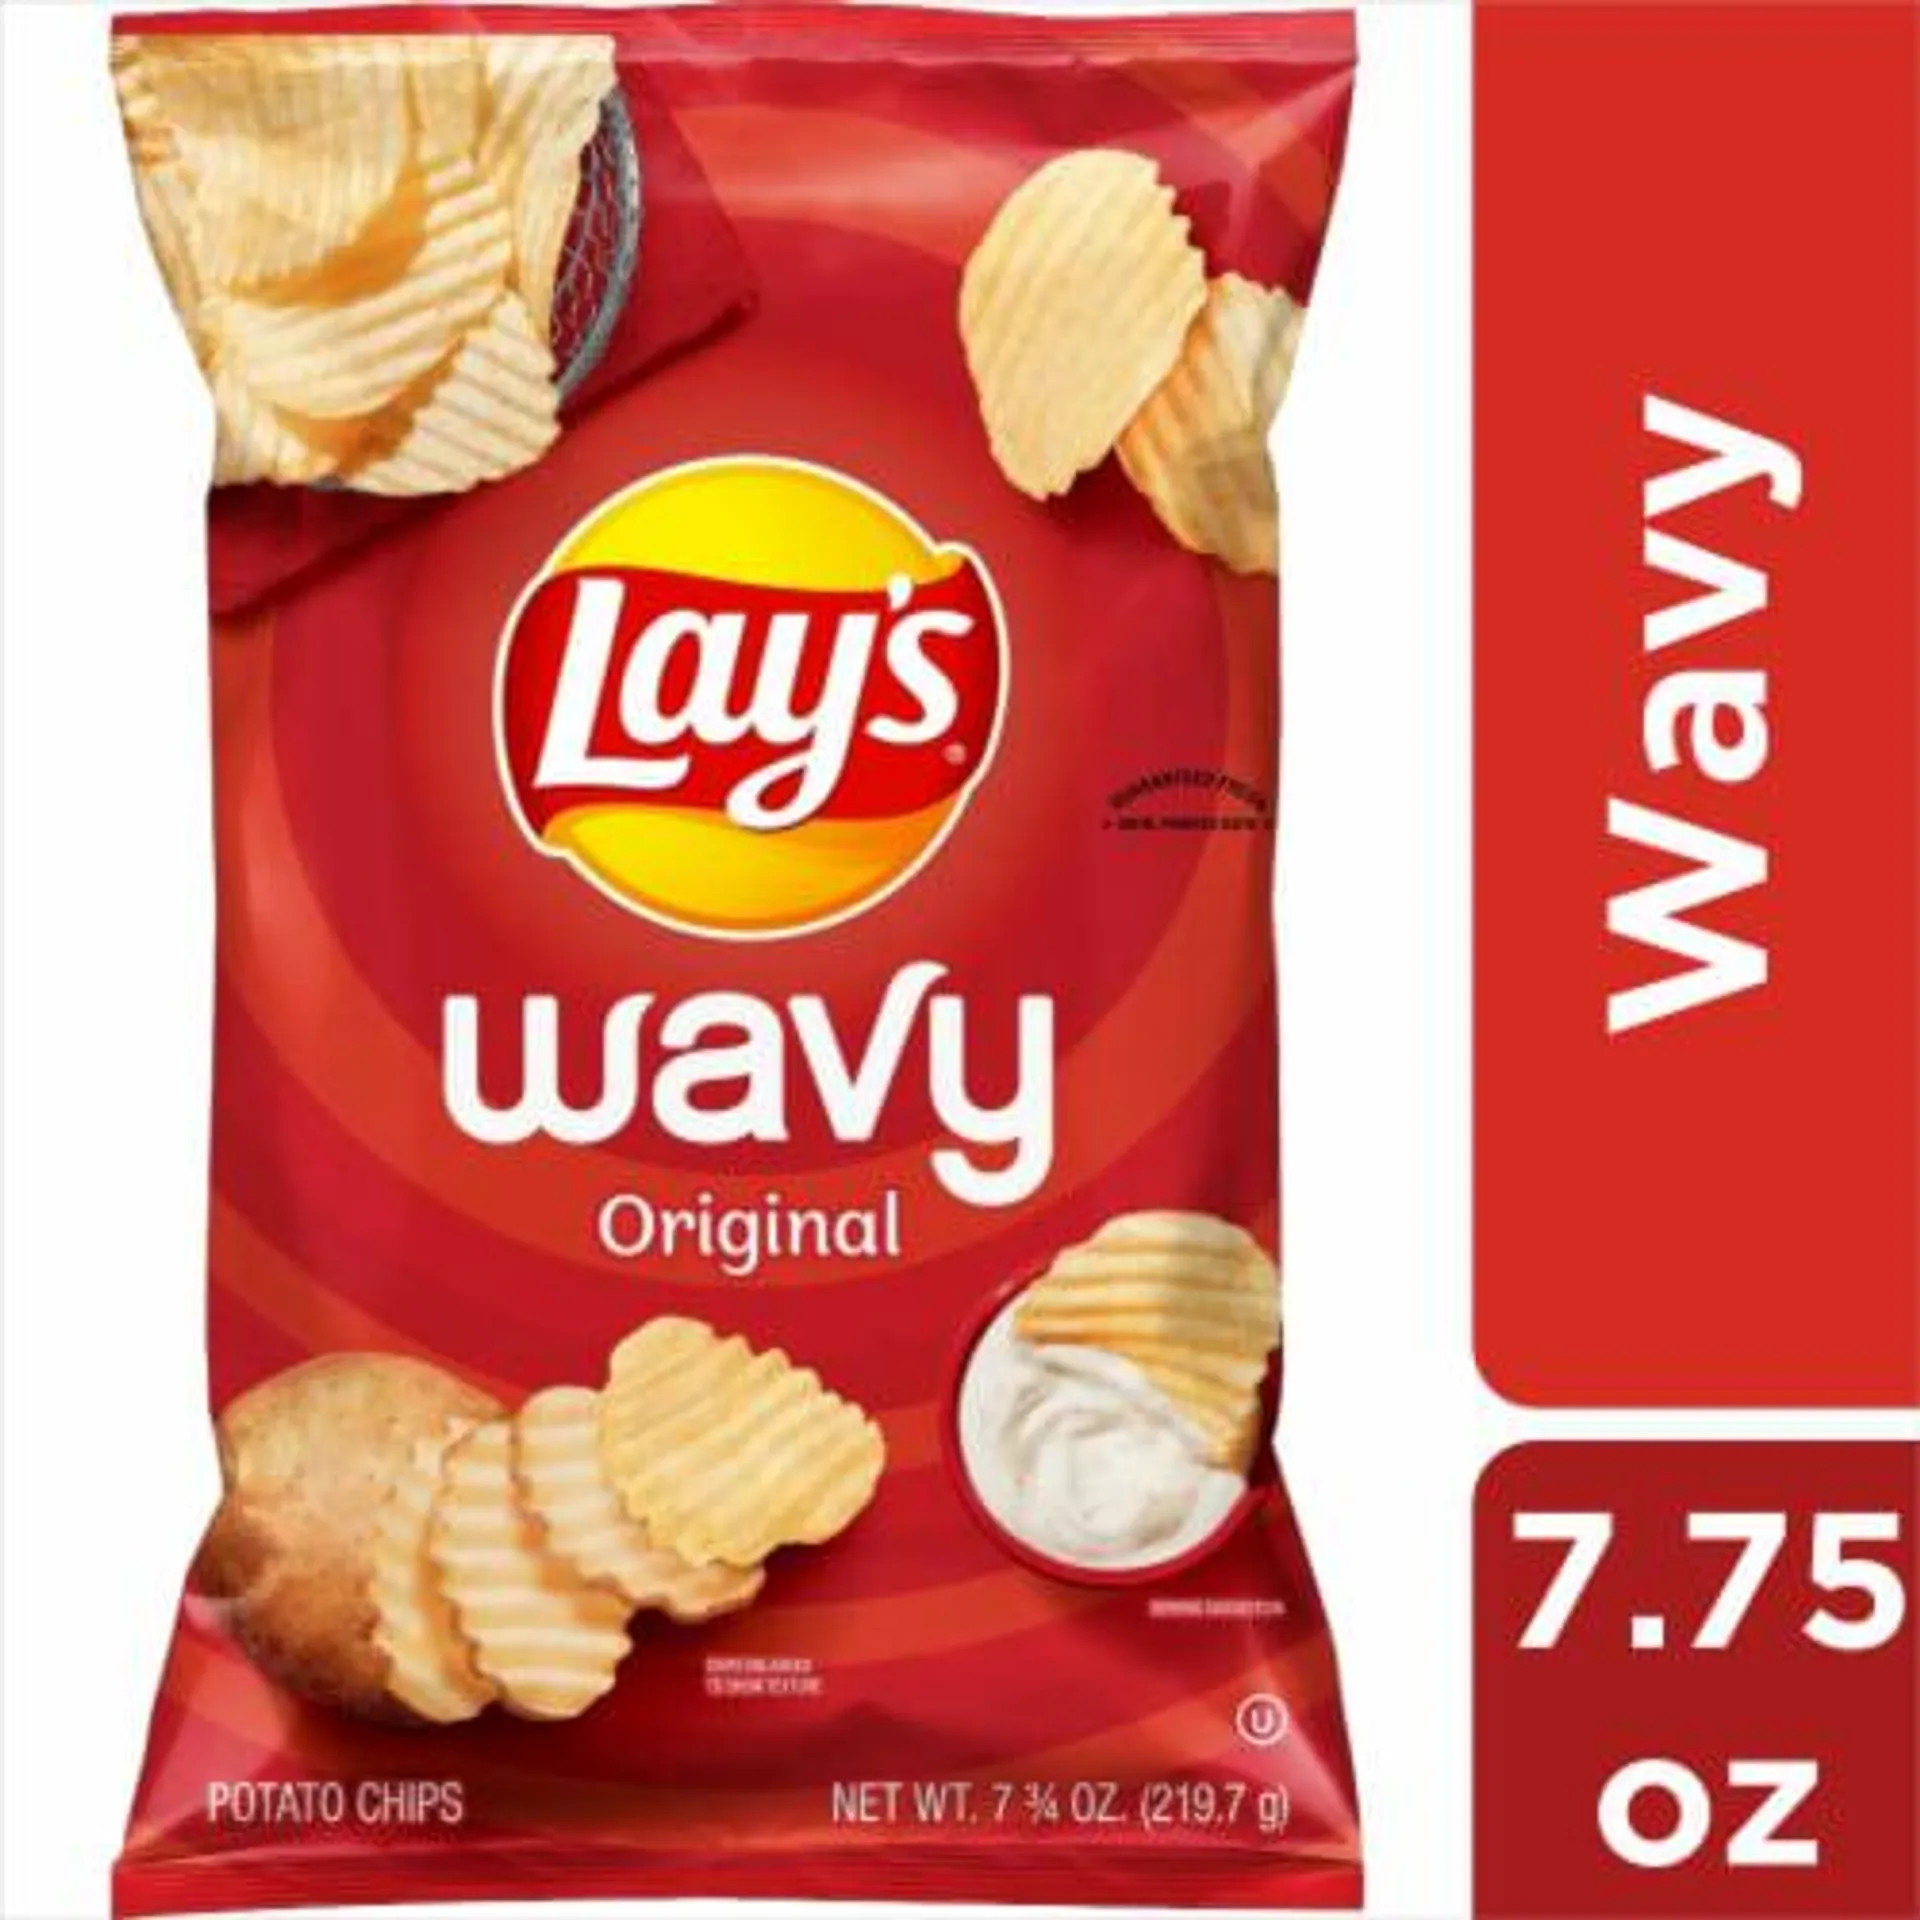 Lay's® Original Wavy Potato Chips